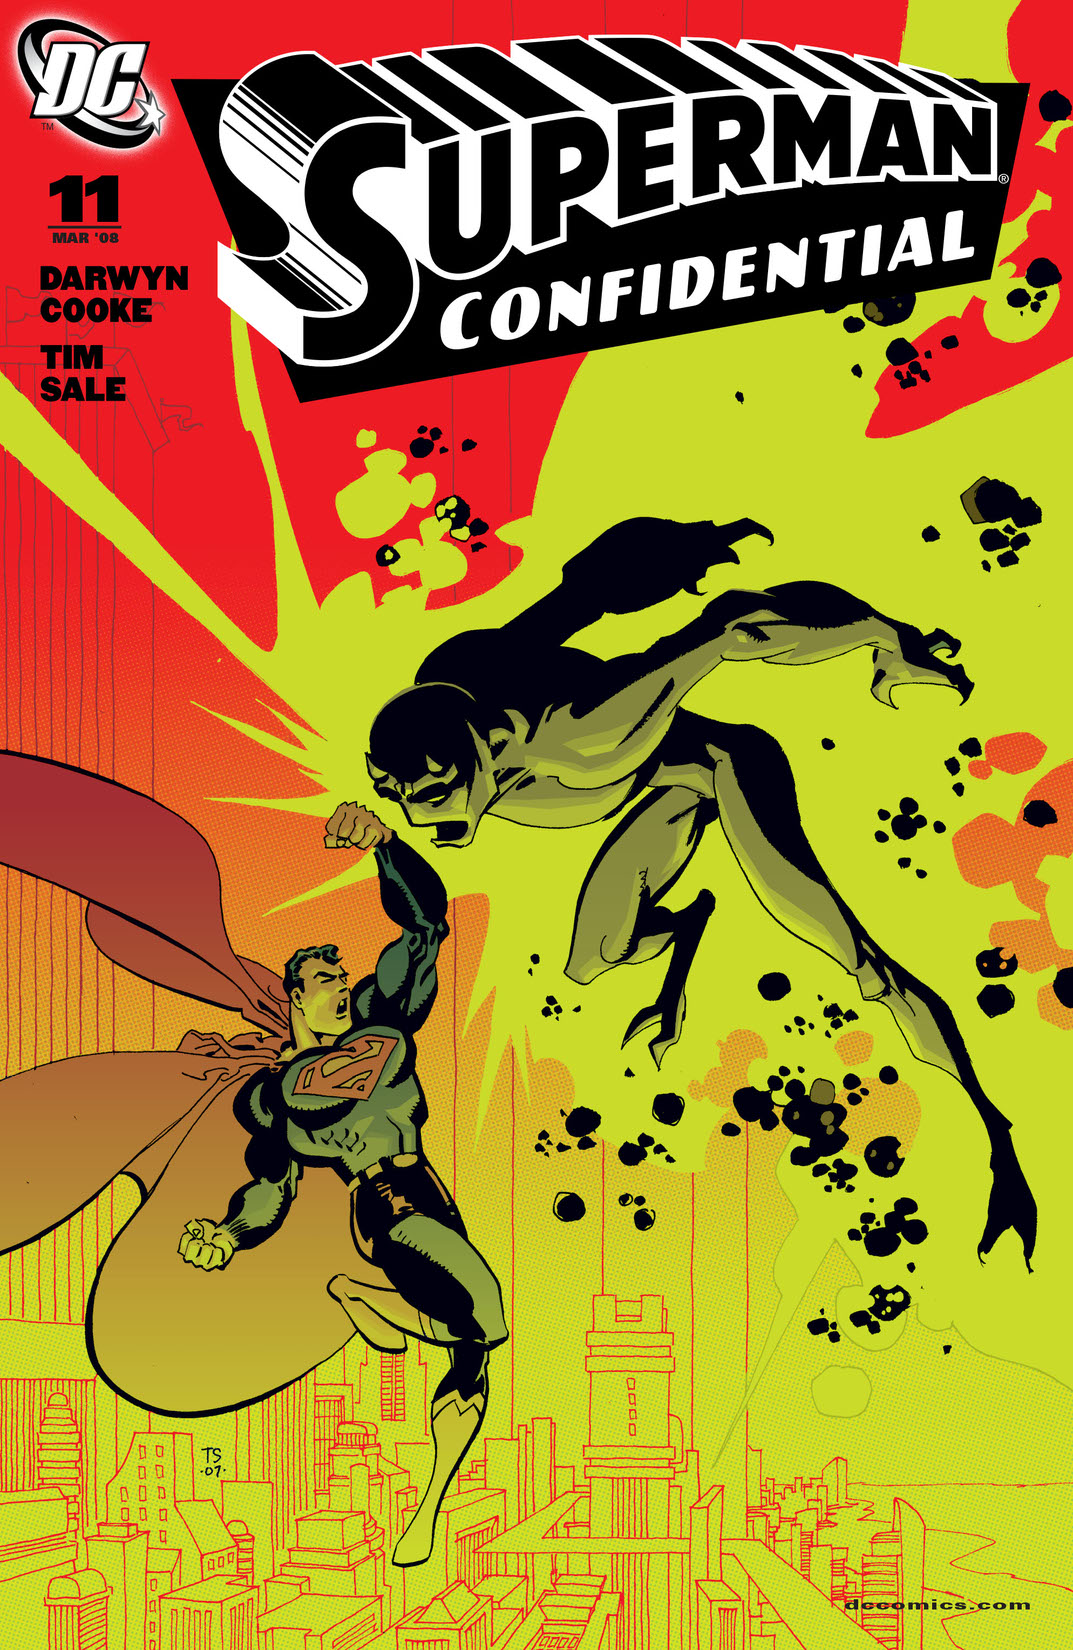 Superman Confidential #11 preview images